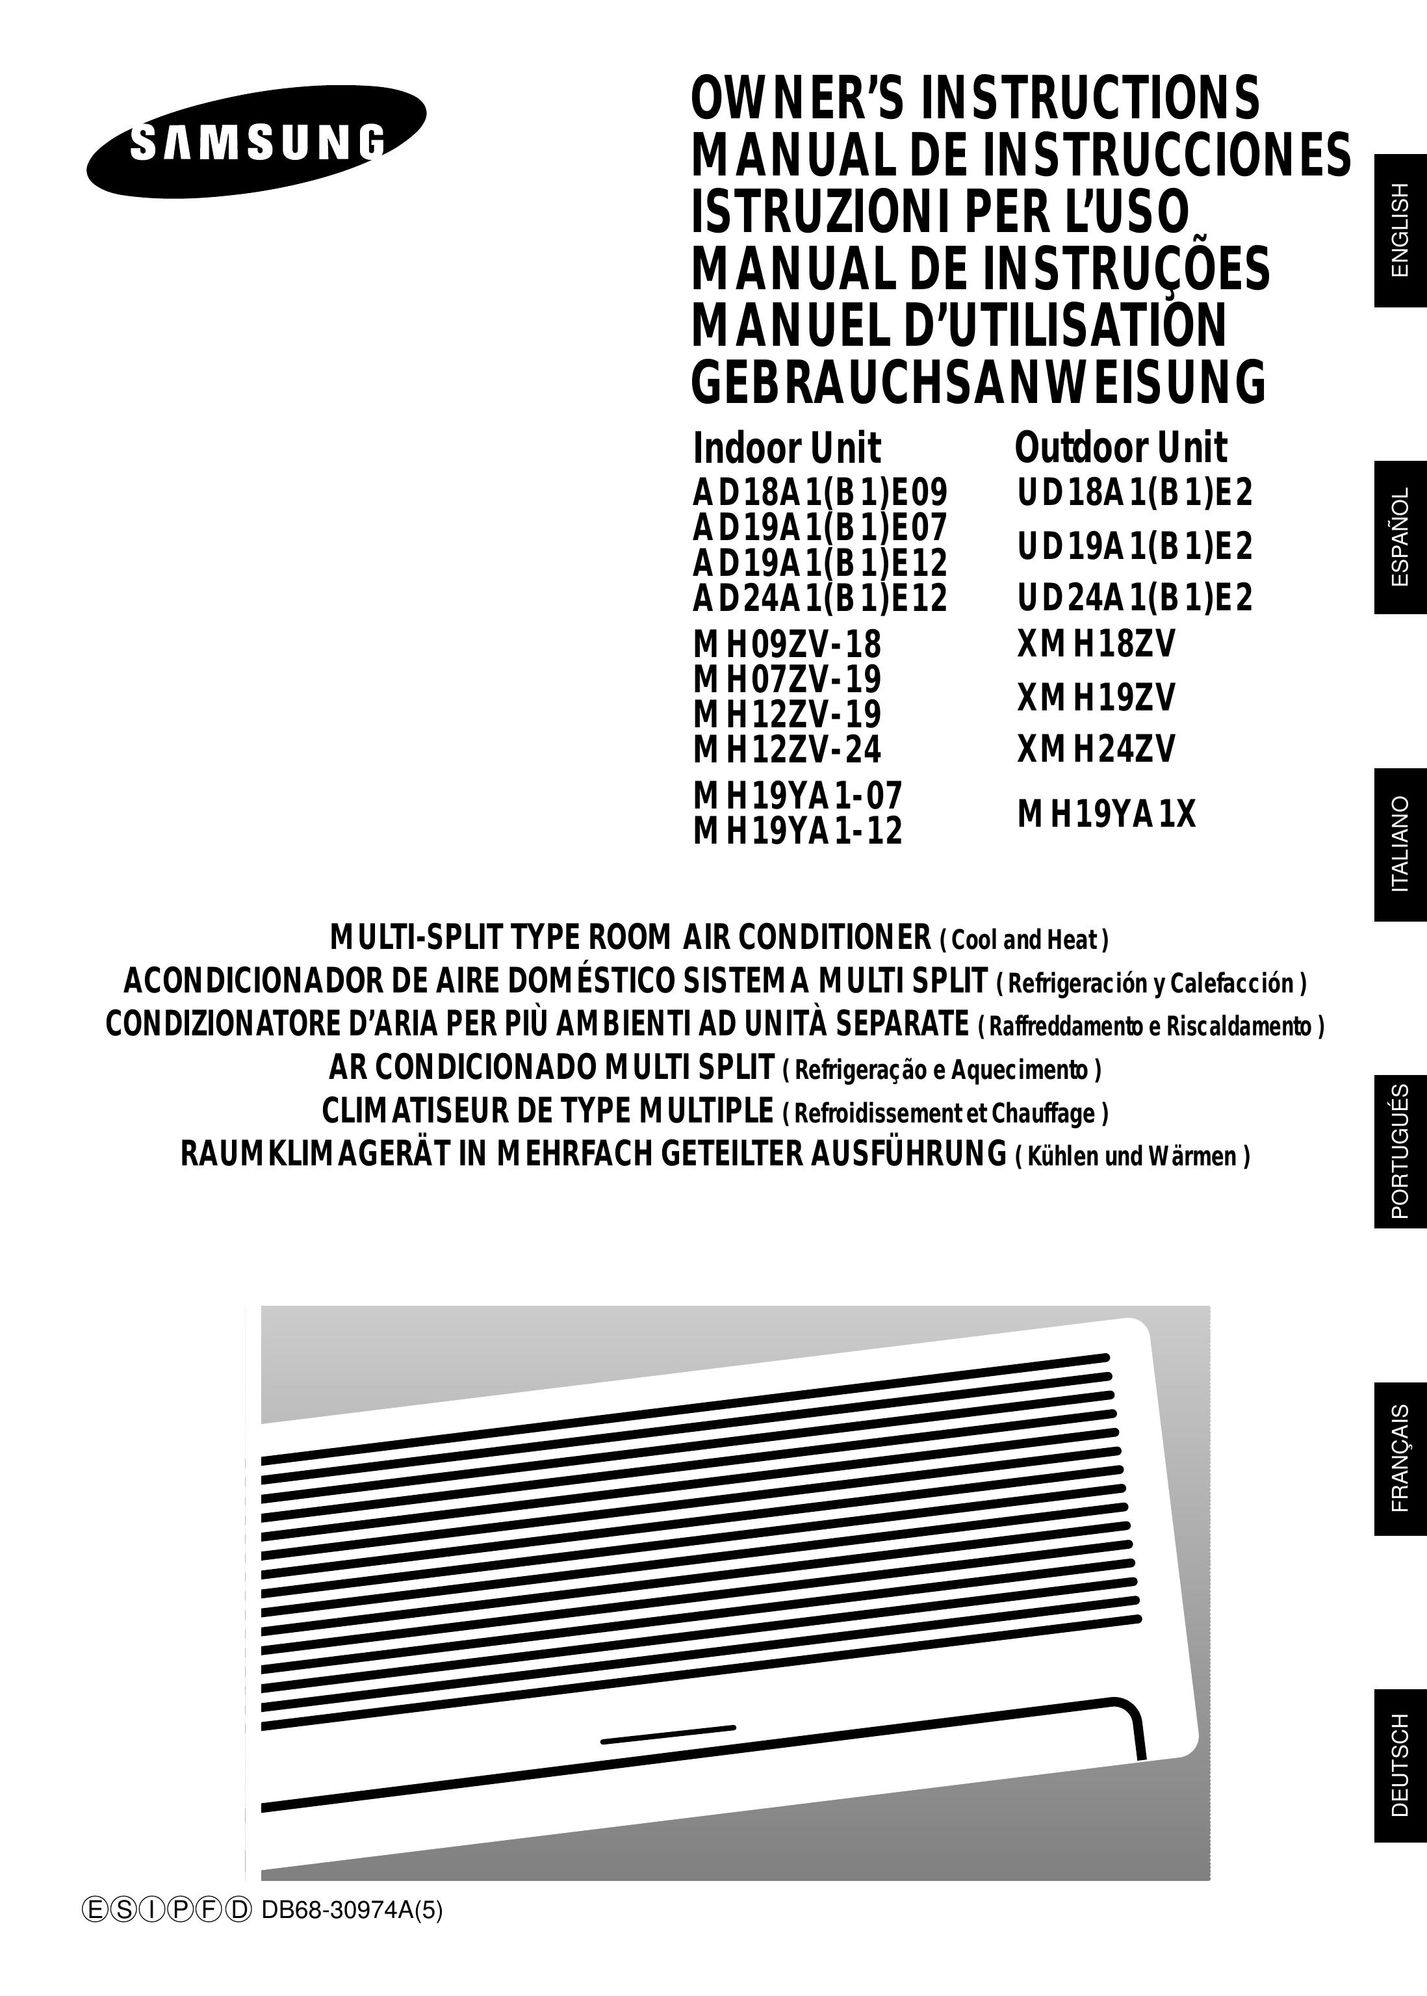 Samsung AD19A1(B1)E07 Air Conditioner User Manual